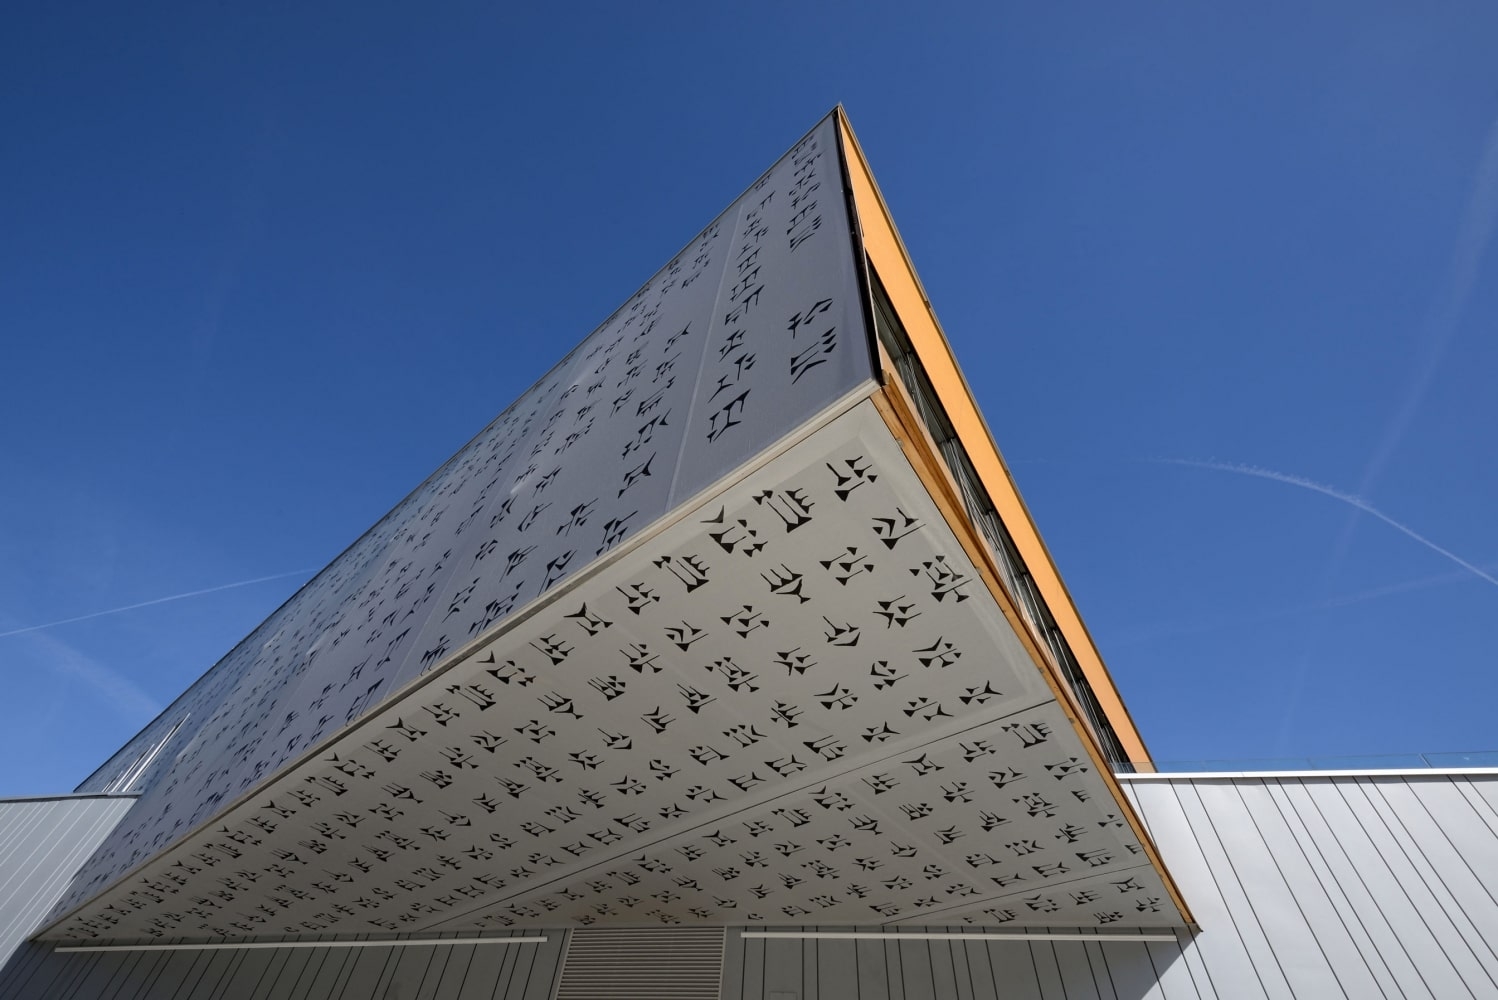 Tekstylna fasada Biblioteki Multimedialnej de la Tour du Pin